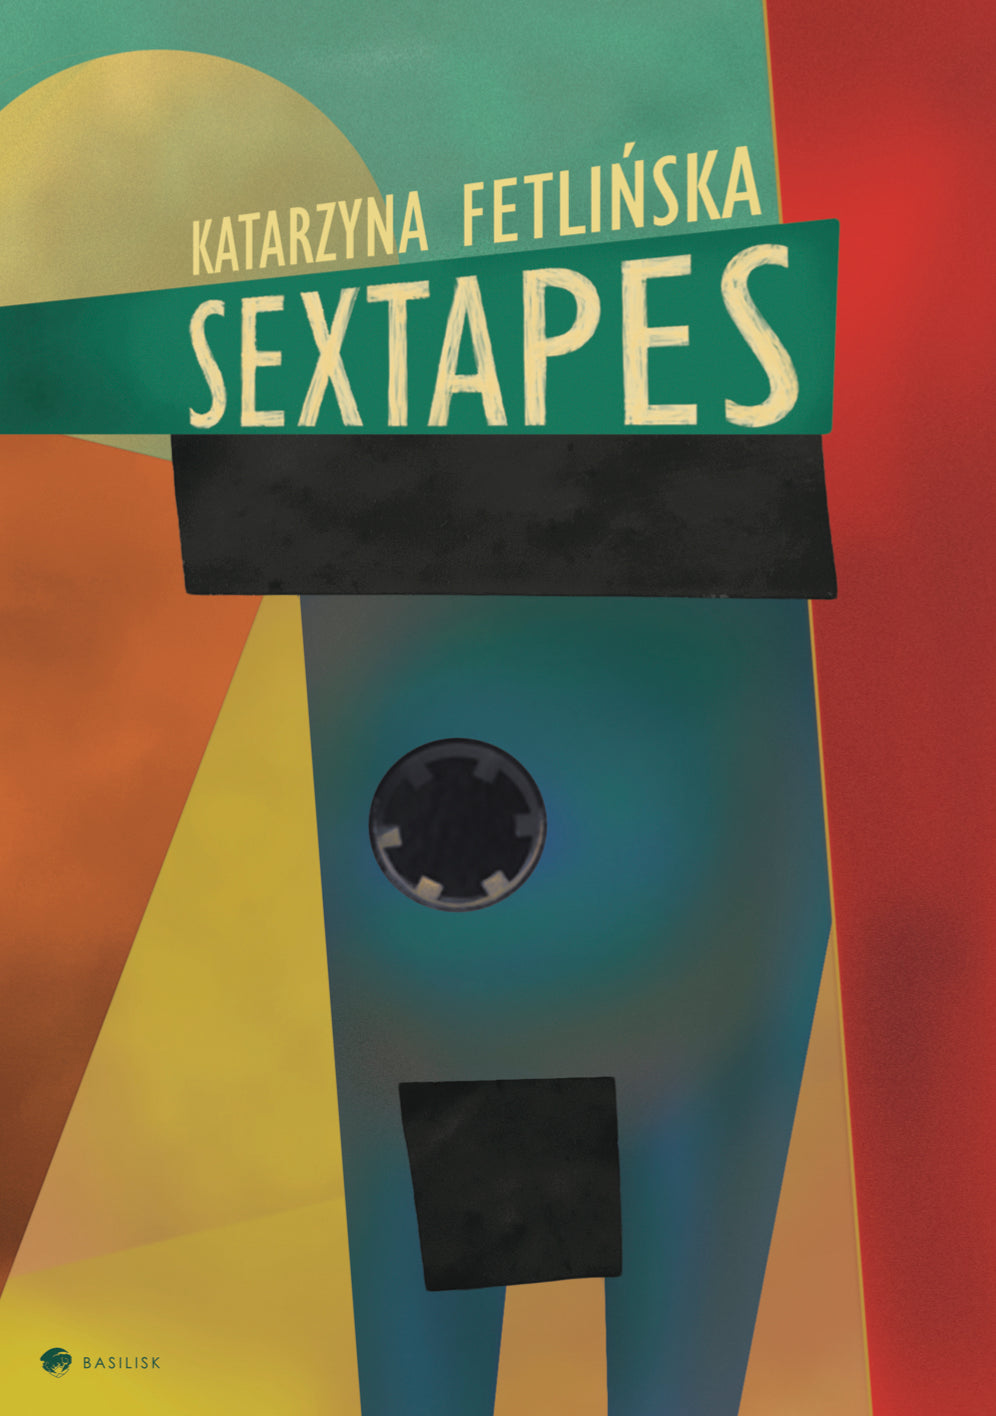 Sextapes